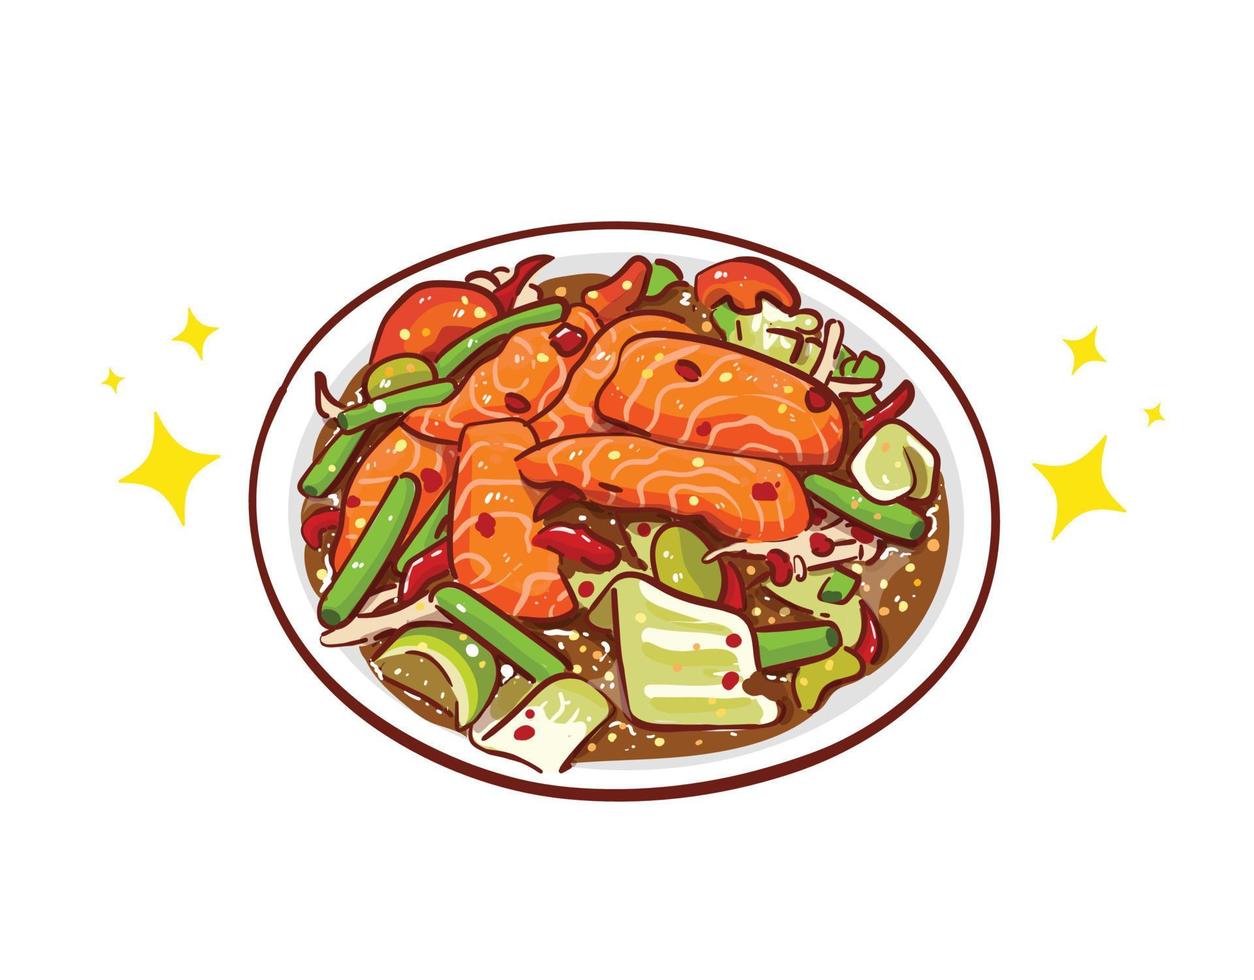 Spicy Salmon Salad spicy food restaurant logo hand draw vector illustration